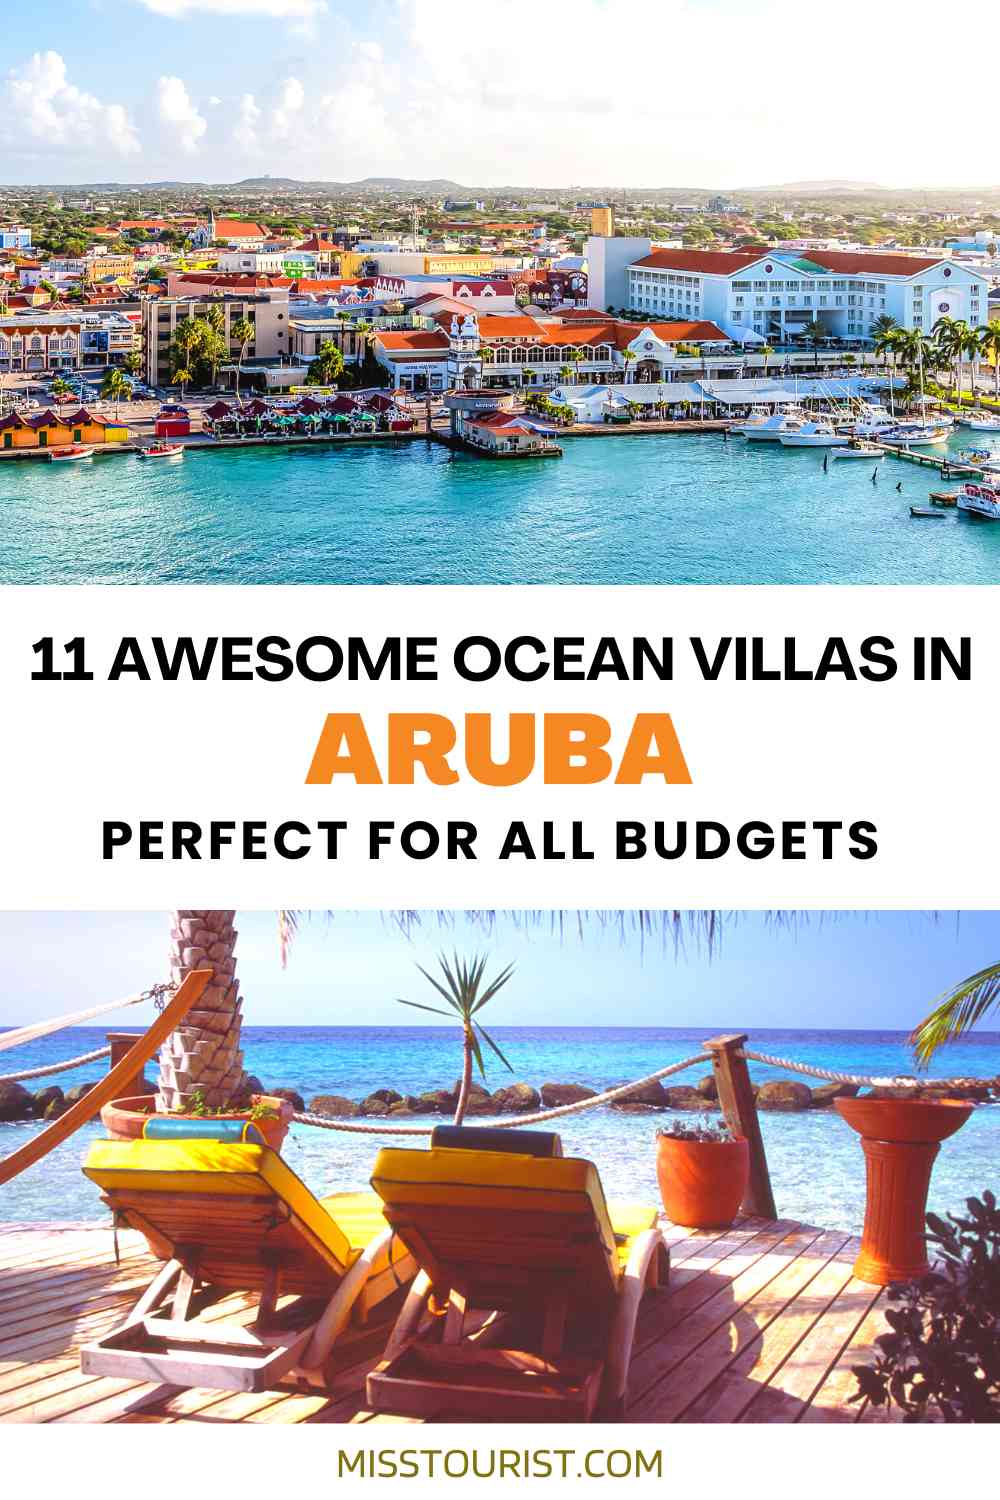 Aruba ocean villas pin 3